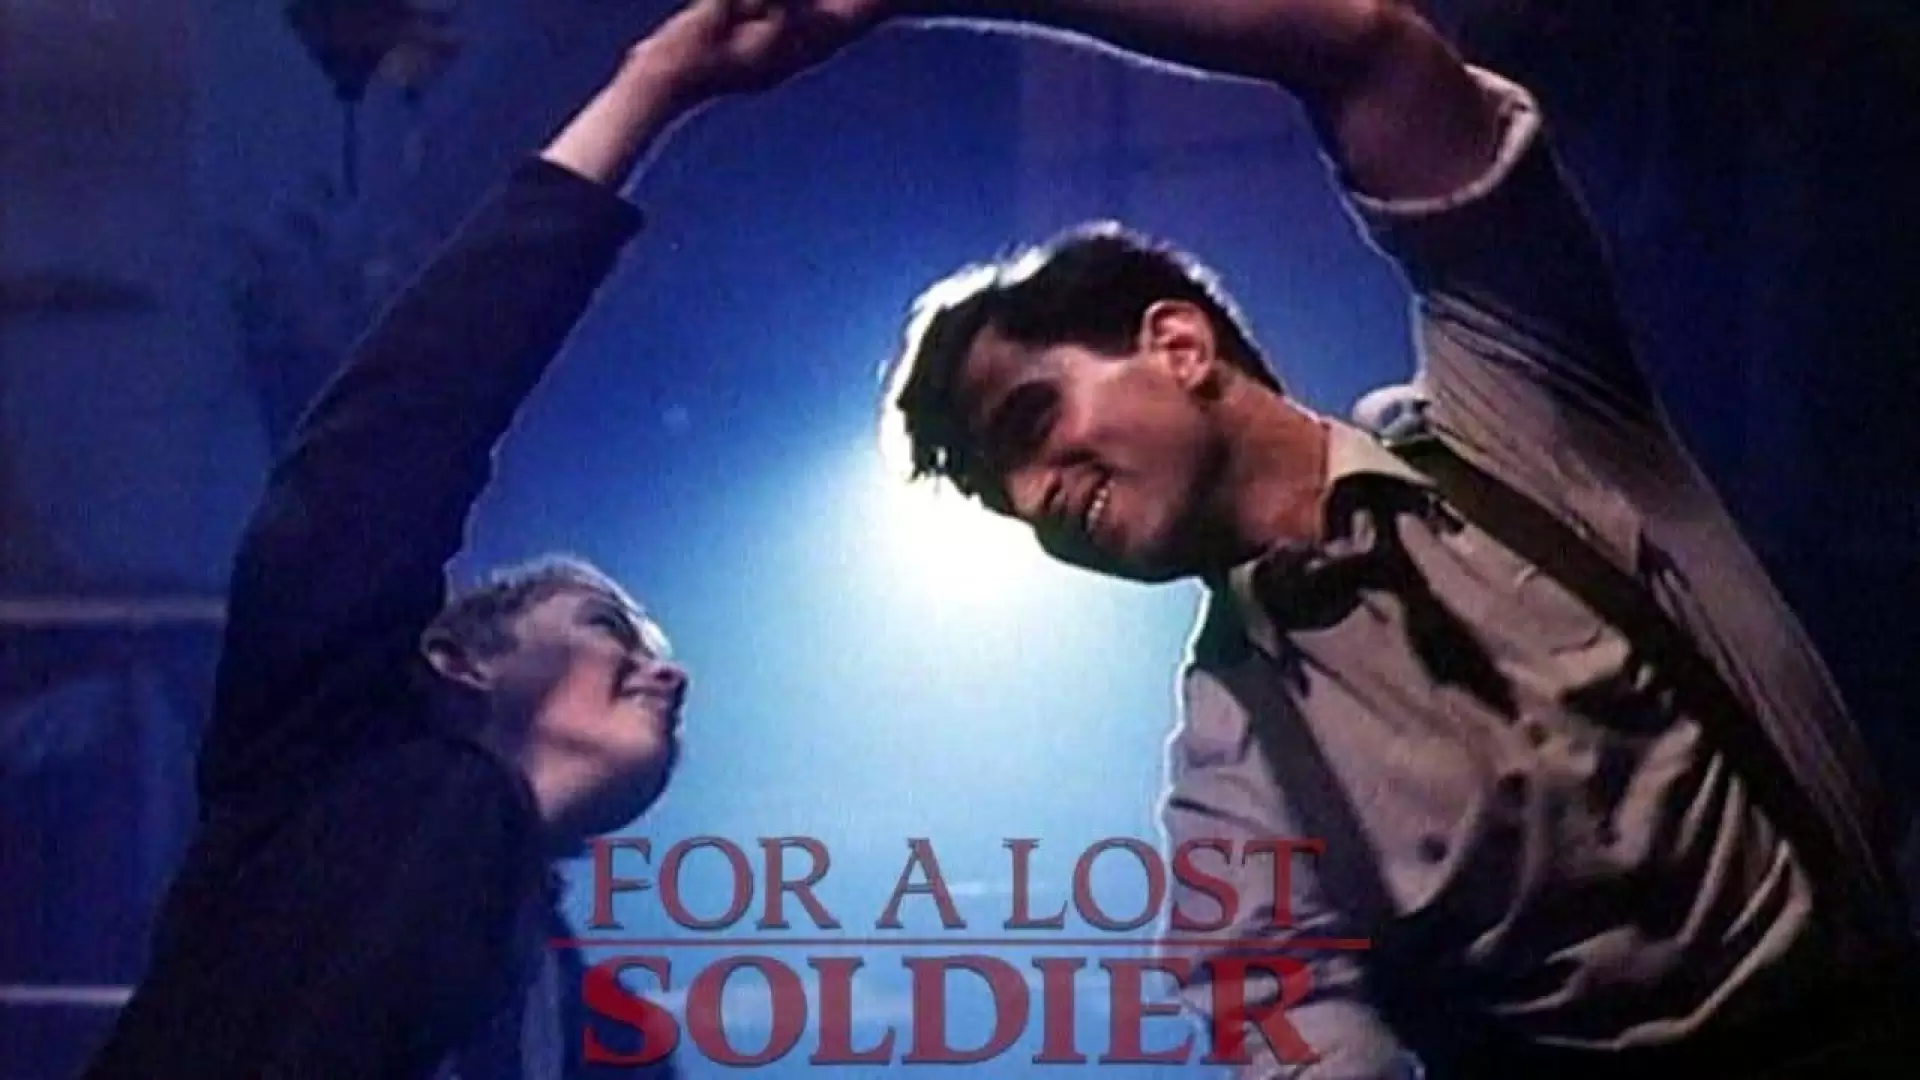 دانلود فیلم For a Lost Soldier 1992